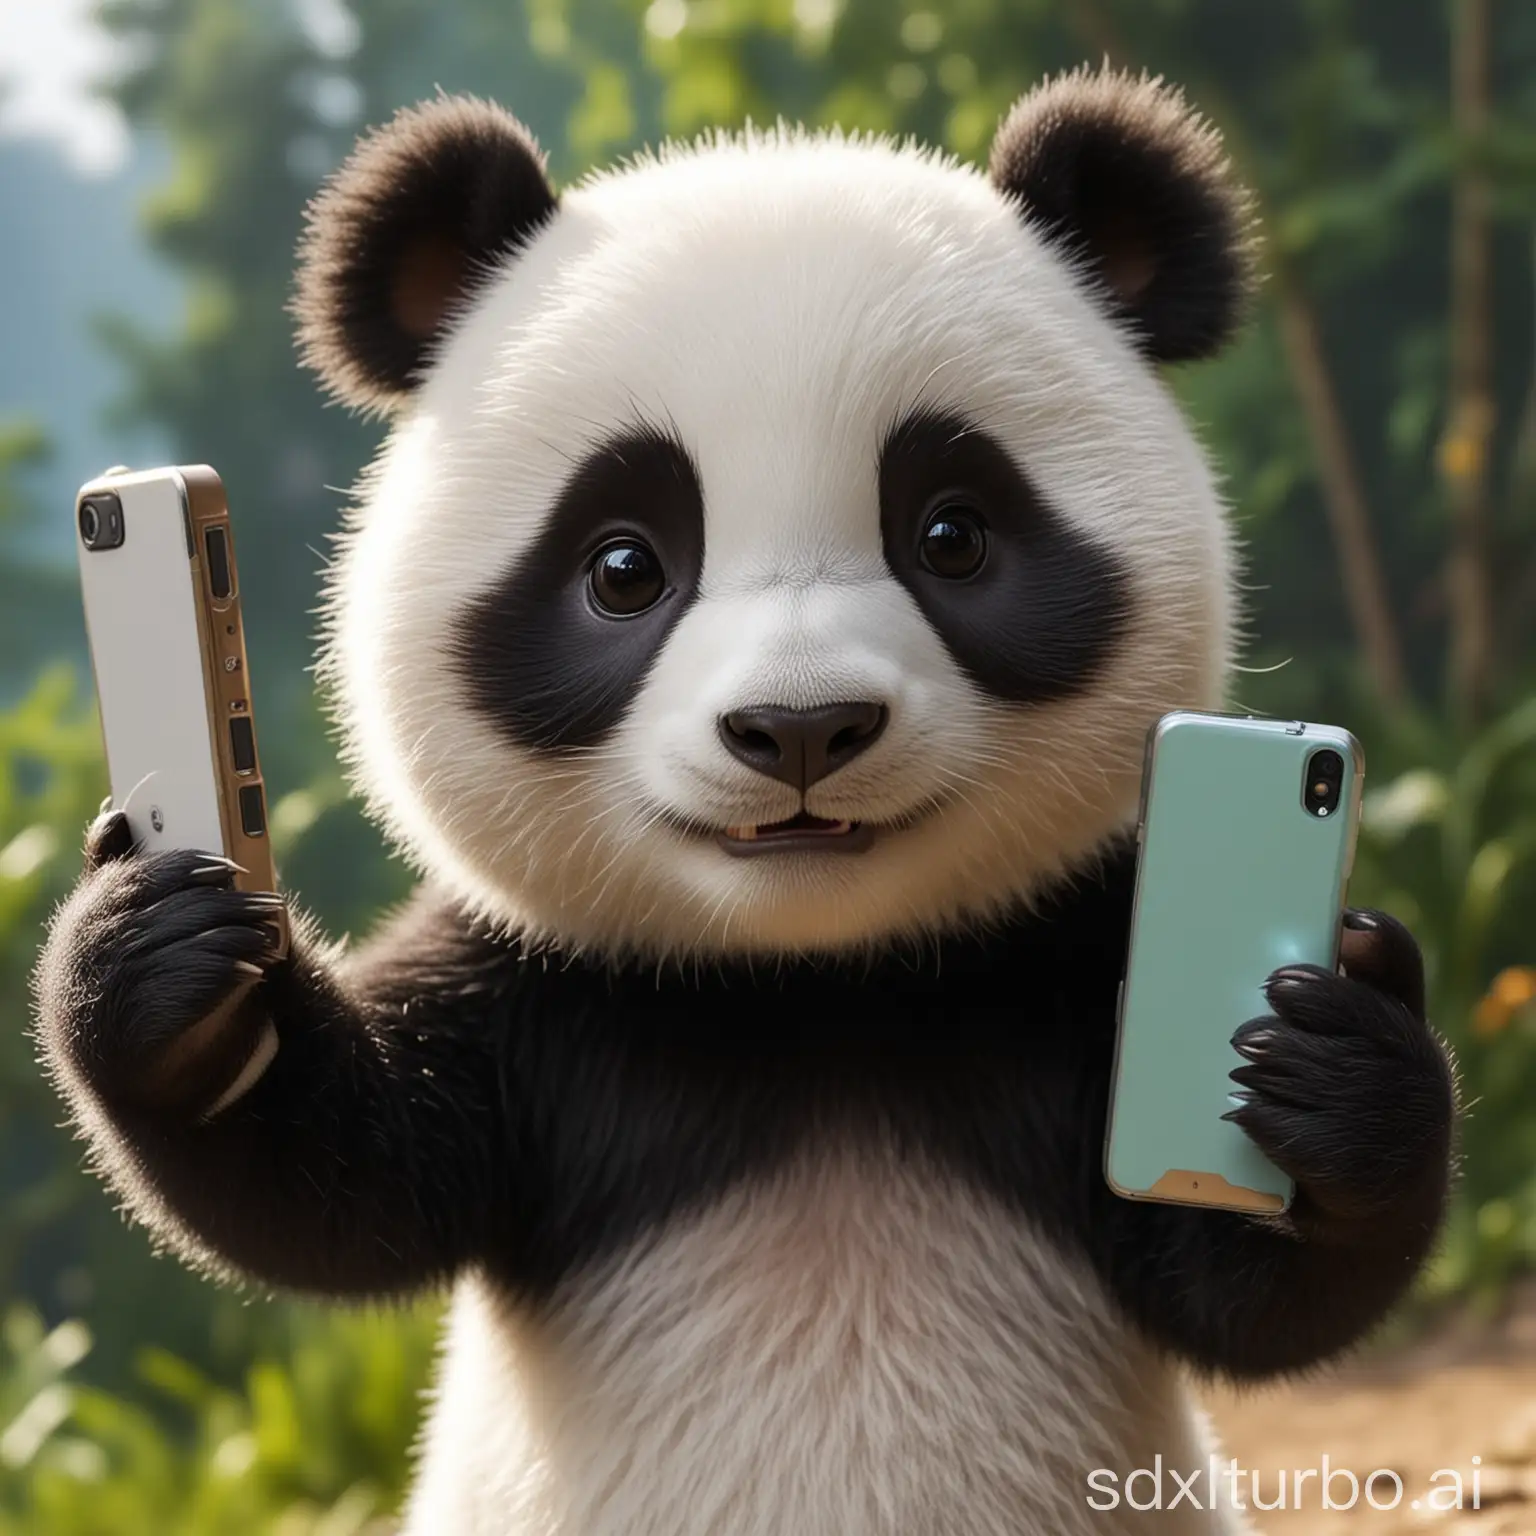 Adorable-Panda-Cub-Capturing-a-Selfie-Moment